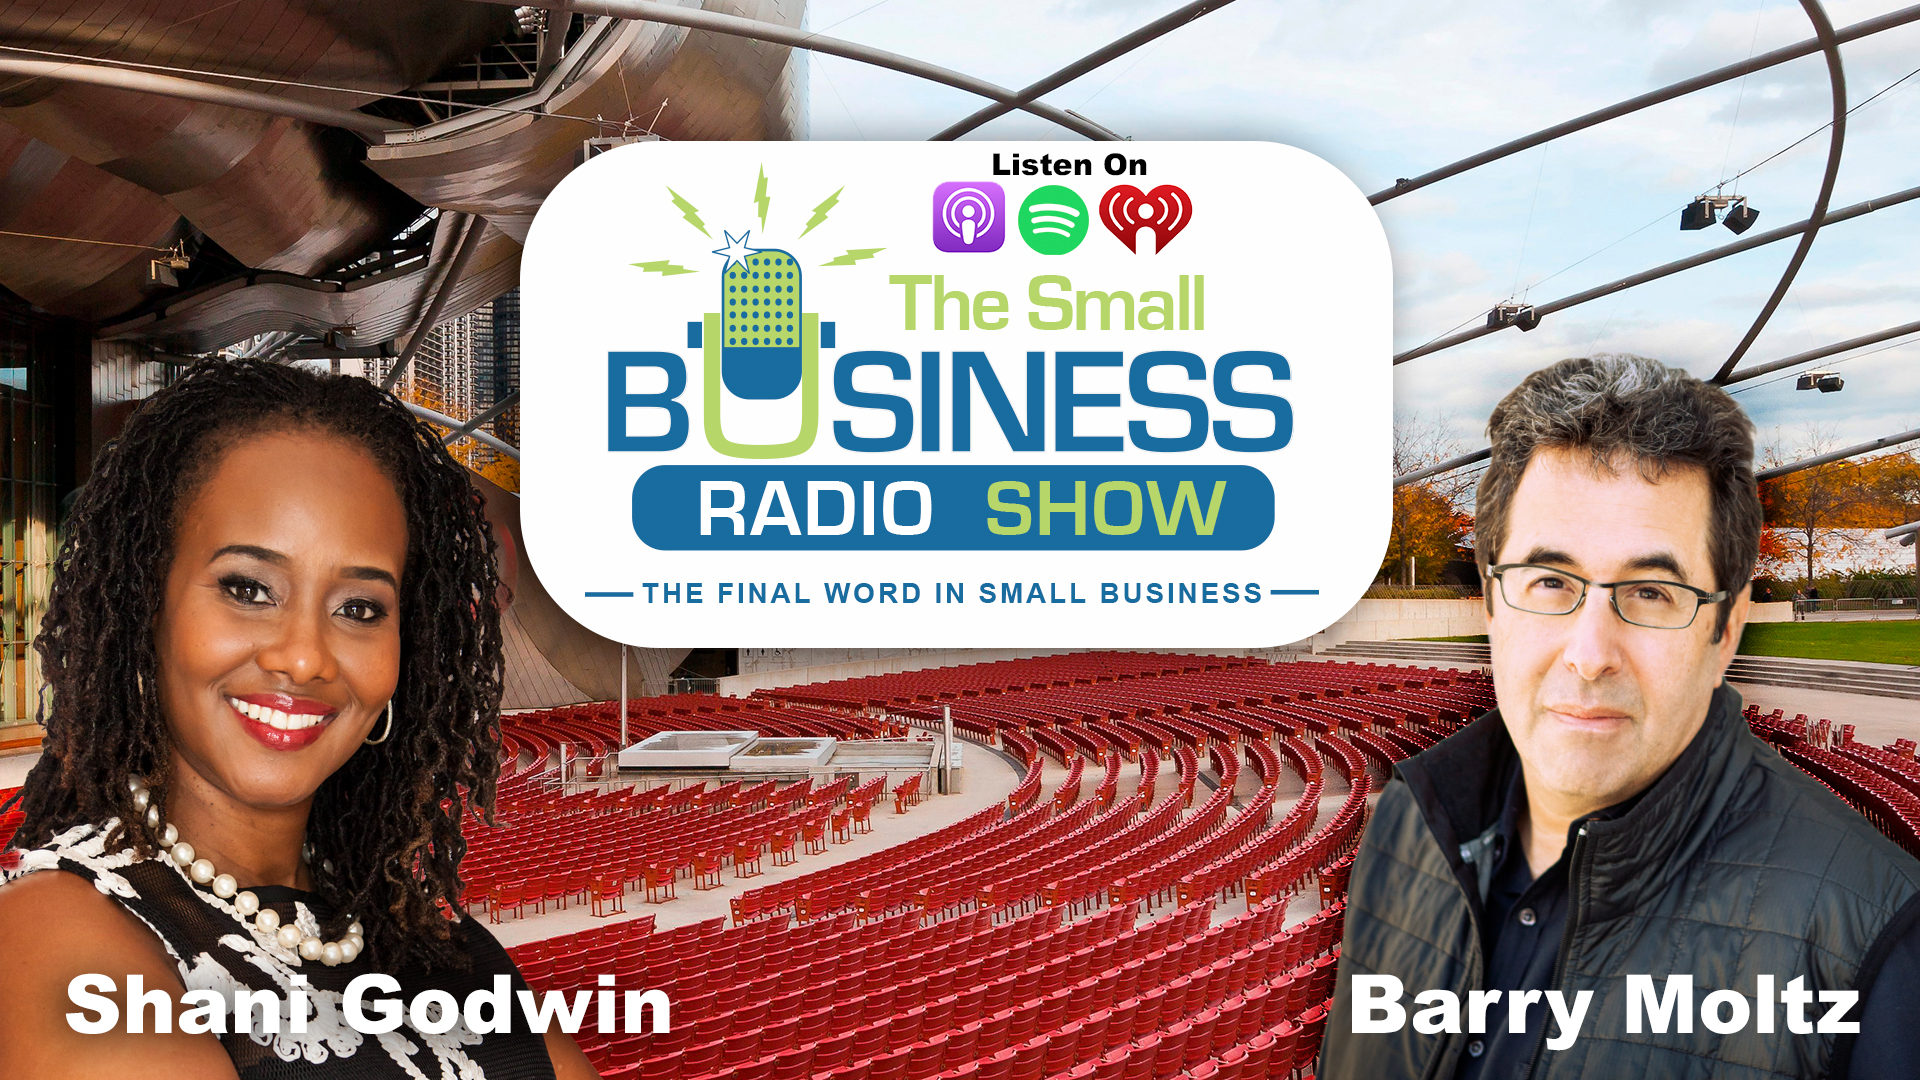 Shani Godwin on The Small Business Radio Show